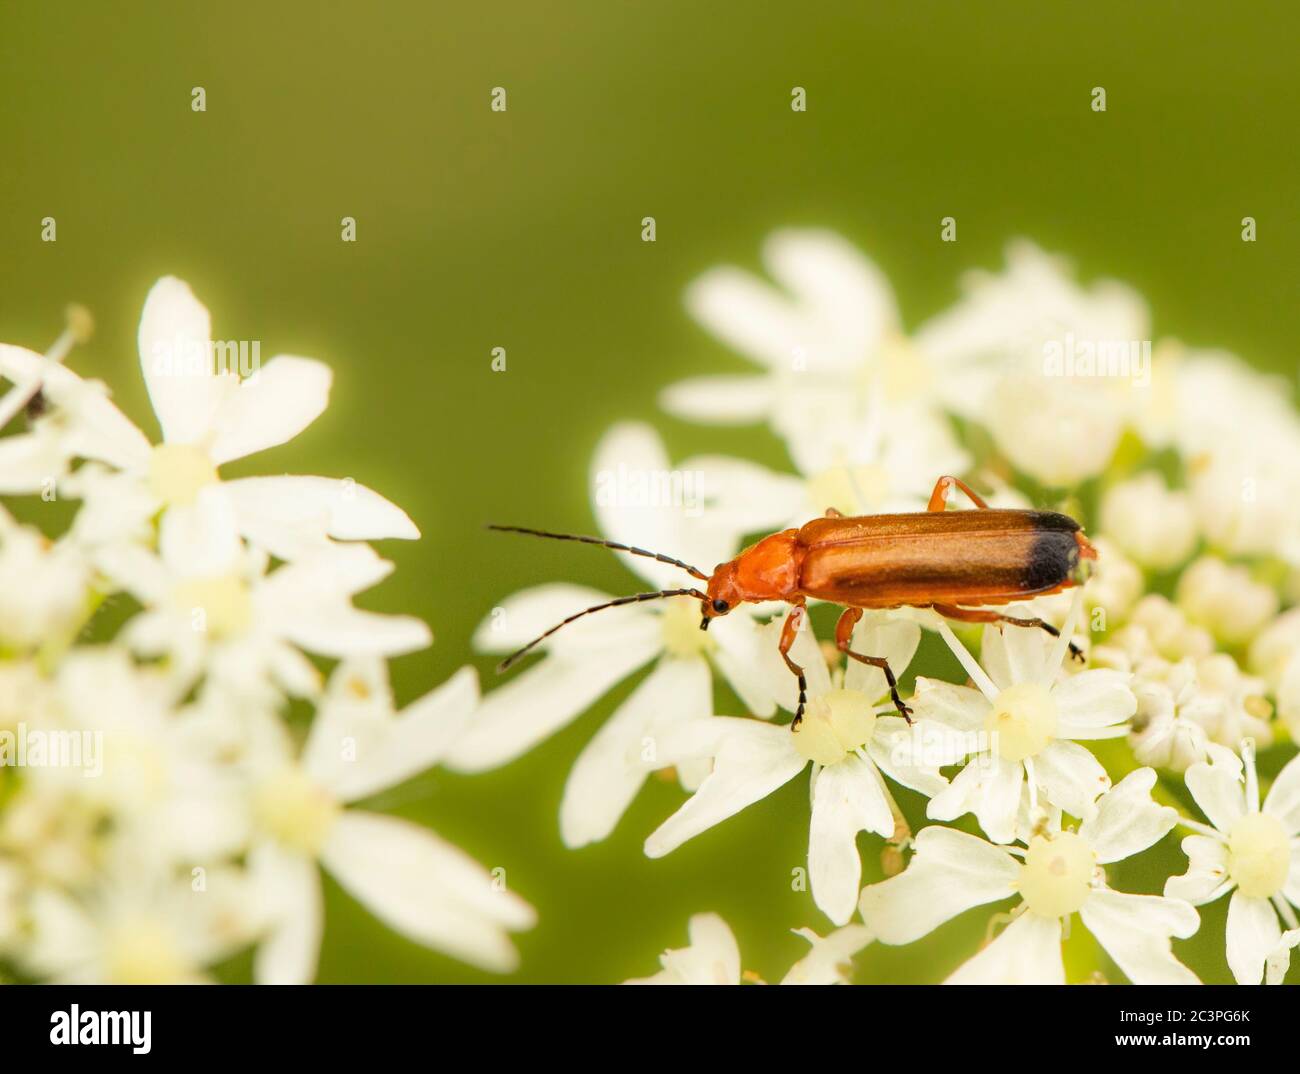 Common red soldier beetle, Rhagonycha fula, rhagonycha, sitting on a flower in the British countryside, July 2020 Stock Photo